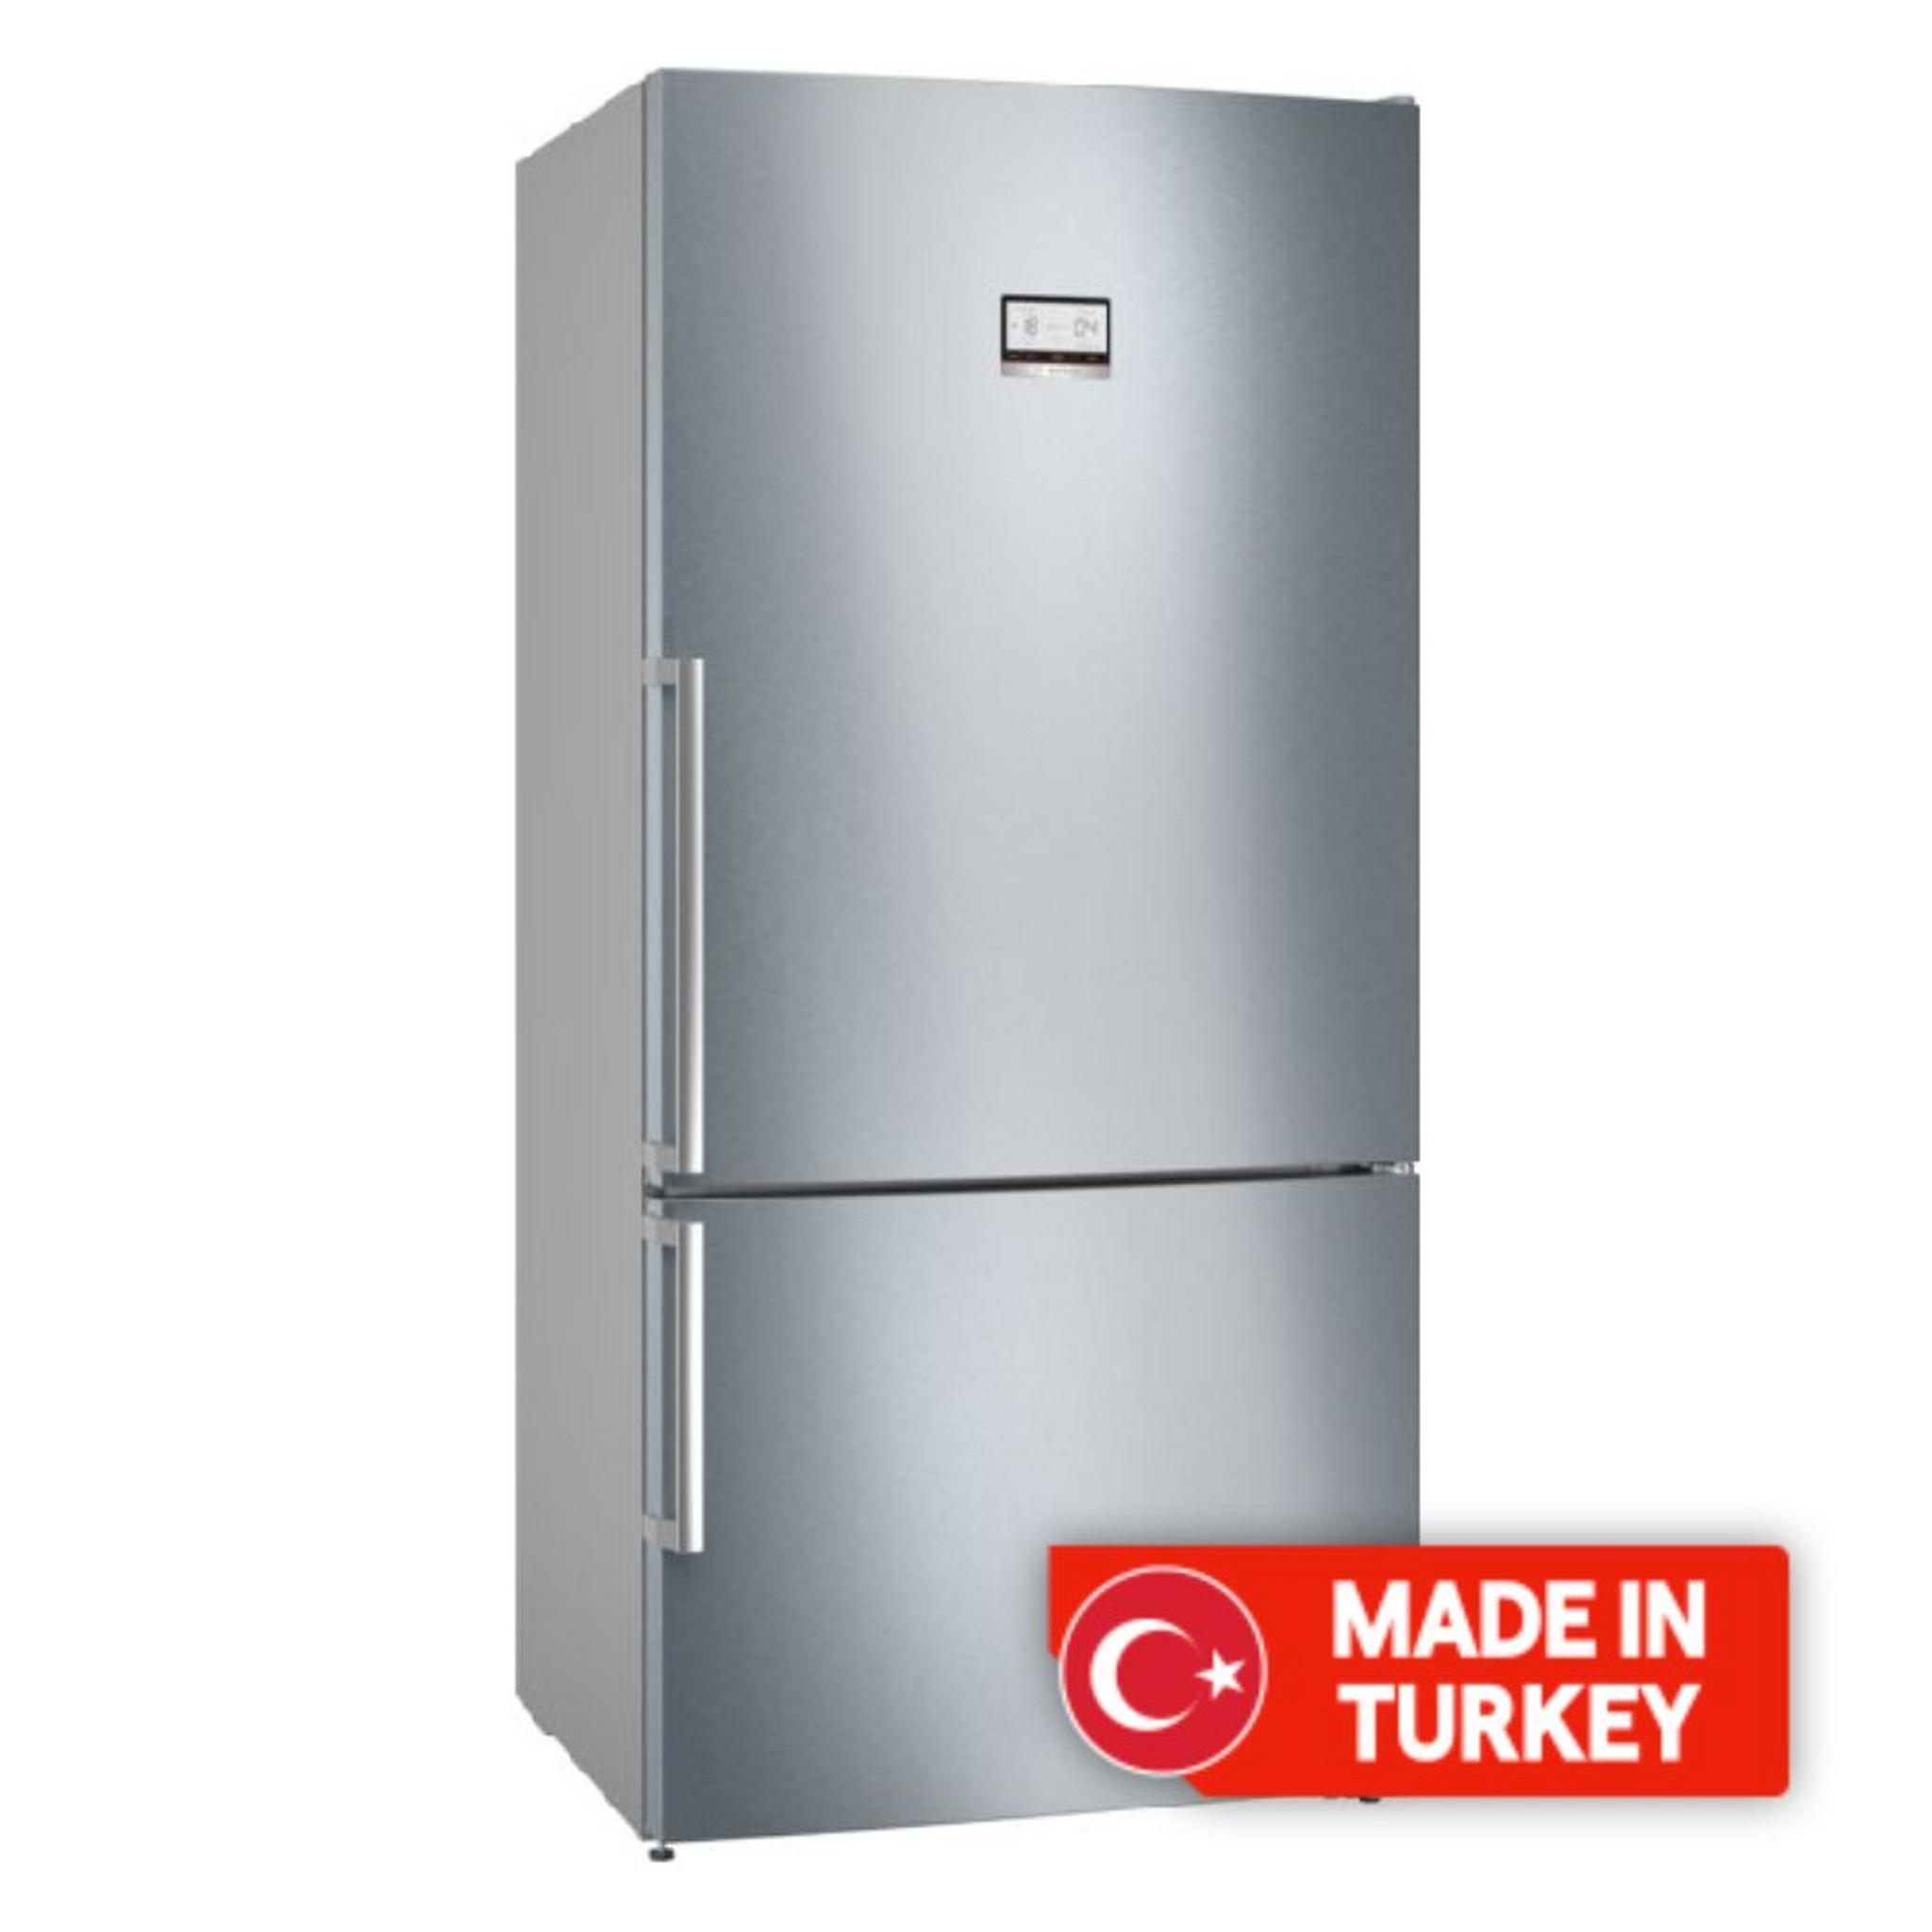 BOSCH Refrigerator BOTTOM FREEZER, 24 CFT, 682L Capacity, KGN86AI31M – Silver